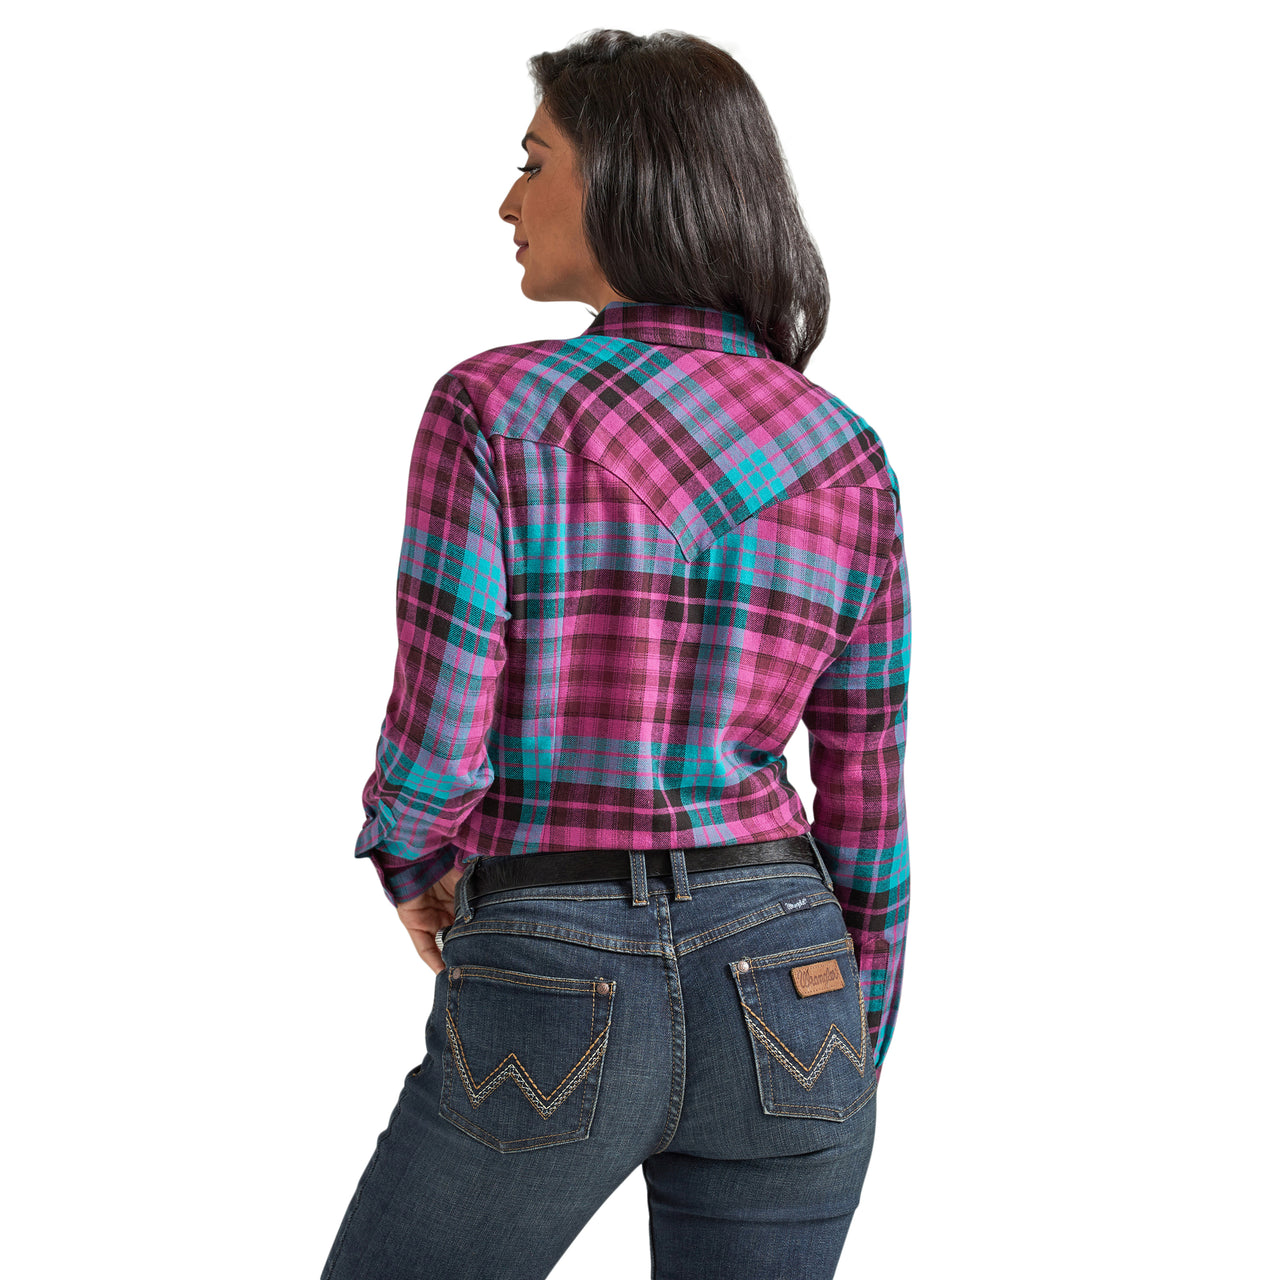 Wrangler Women's Essential Snap Shirt - Pink/Blue Plaid